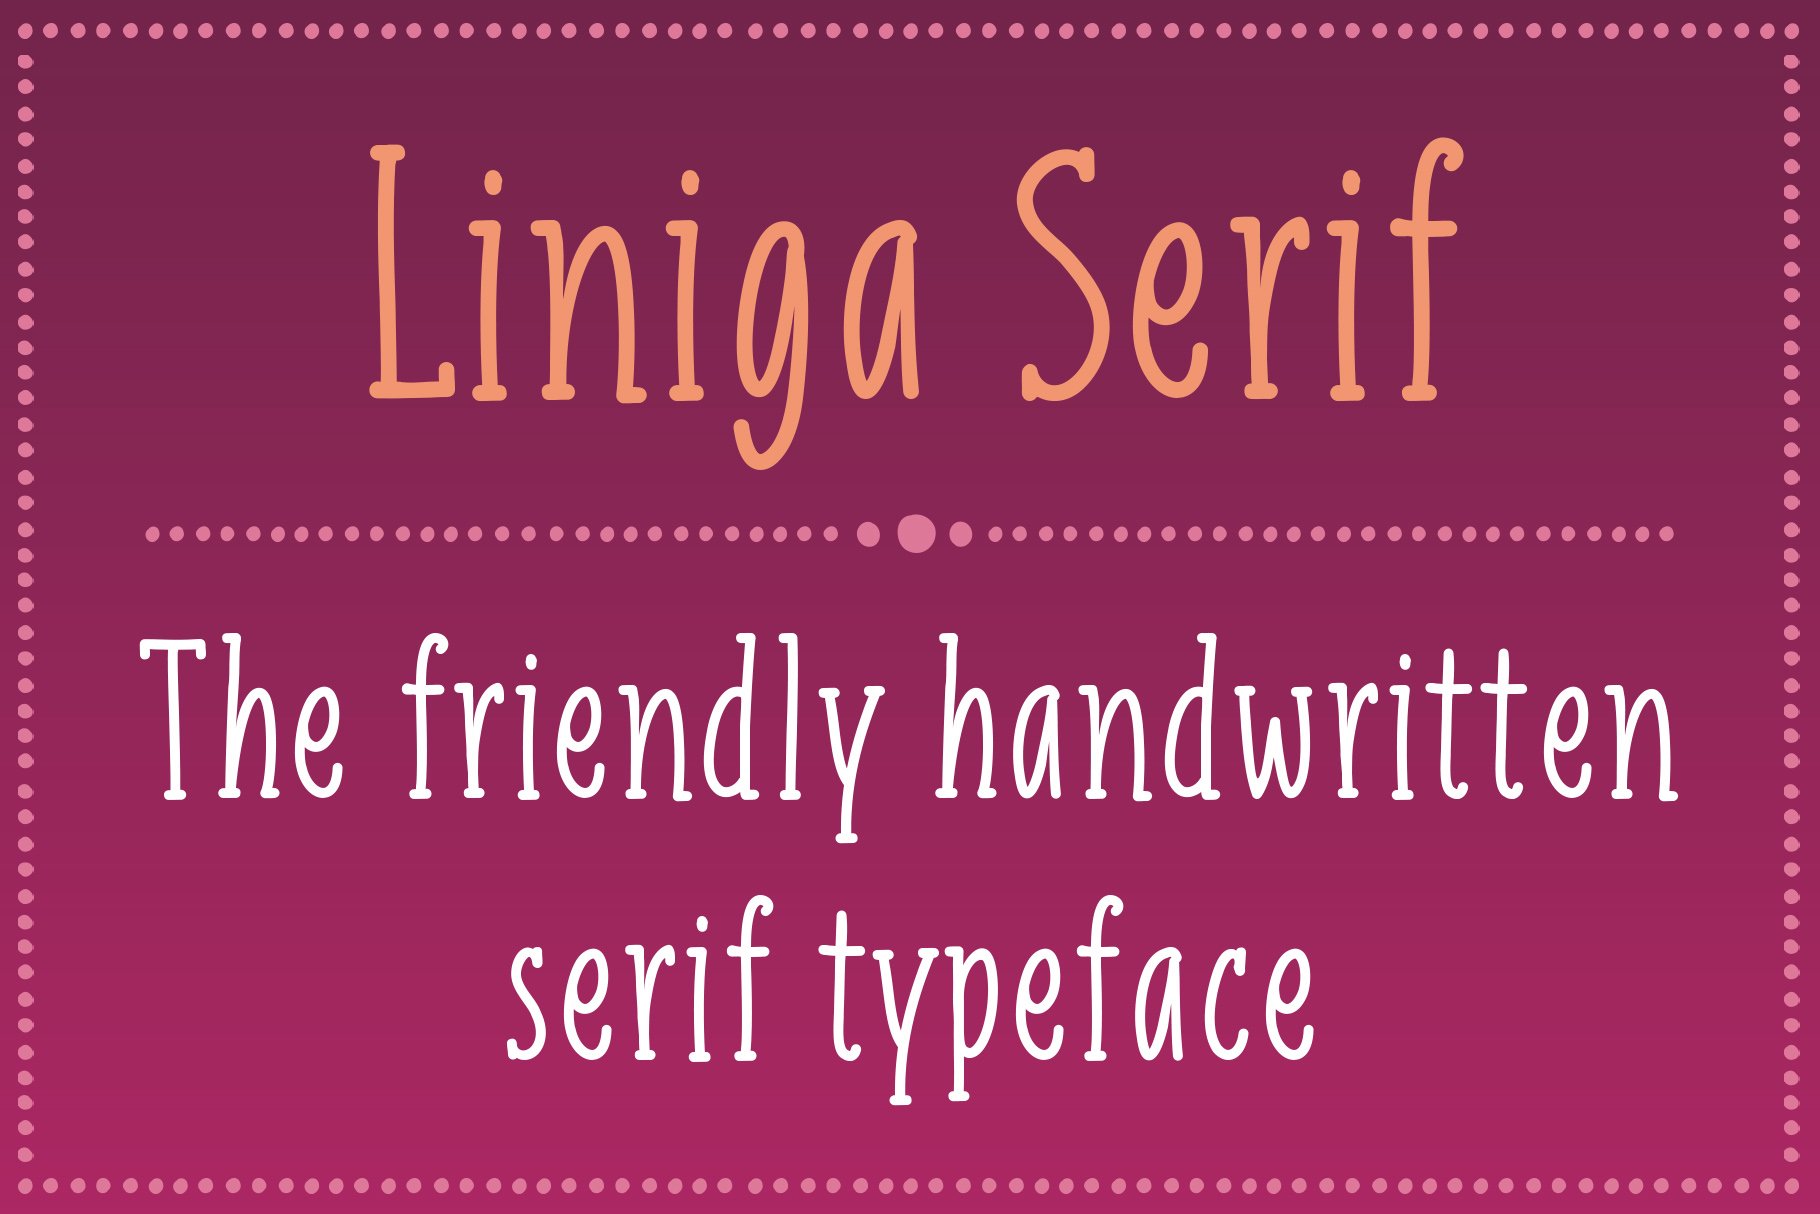 Liniga Serif Font cover image.